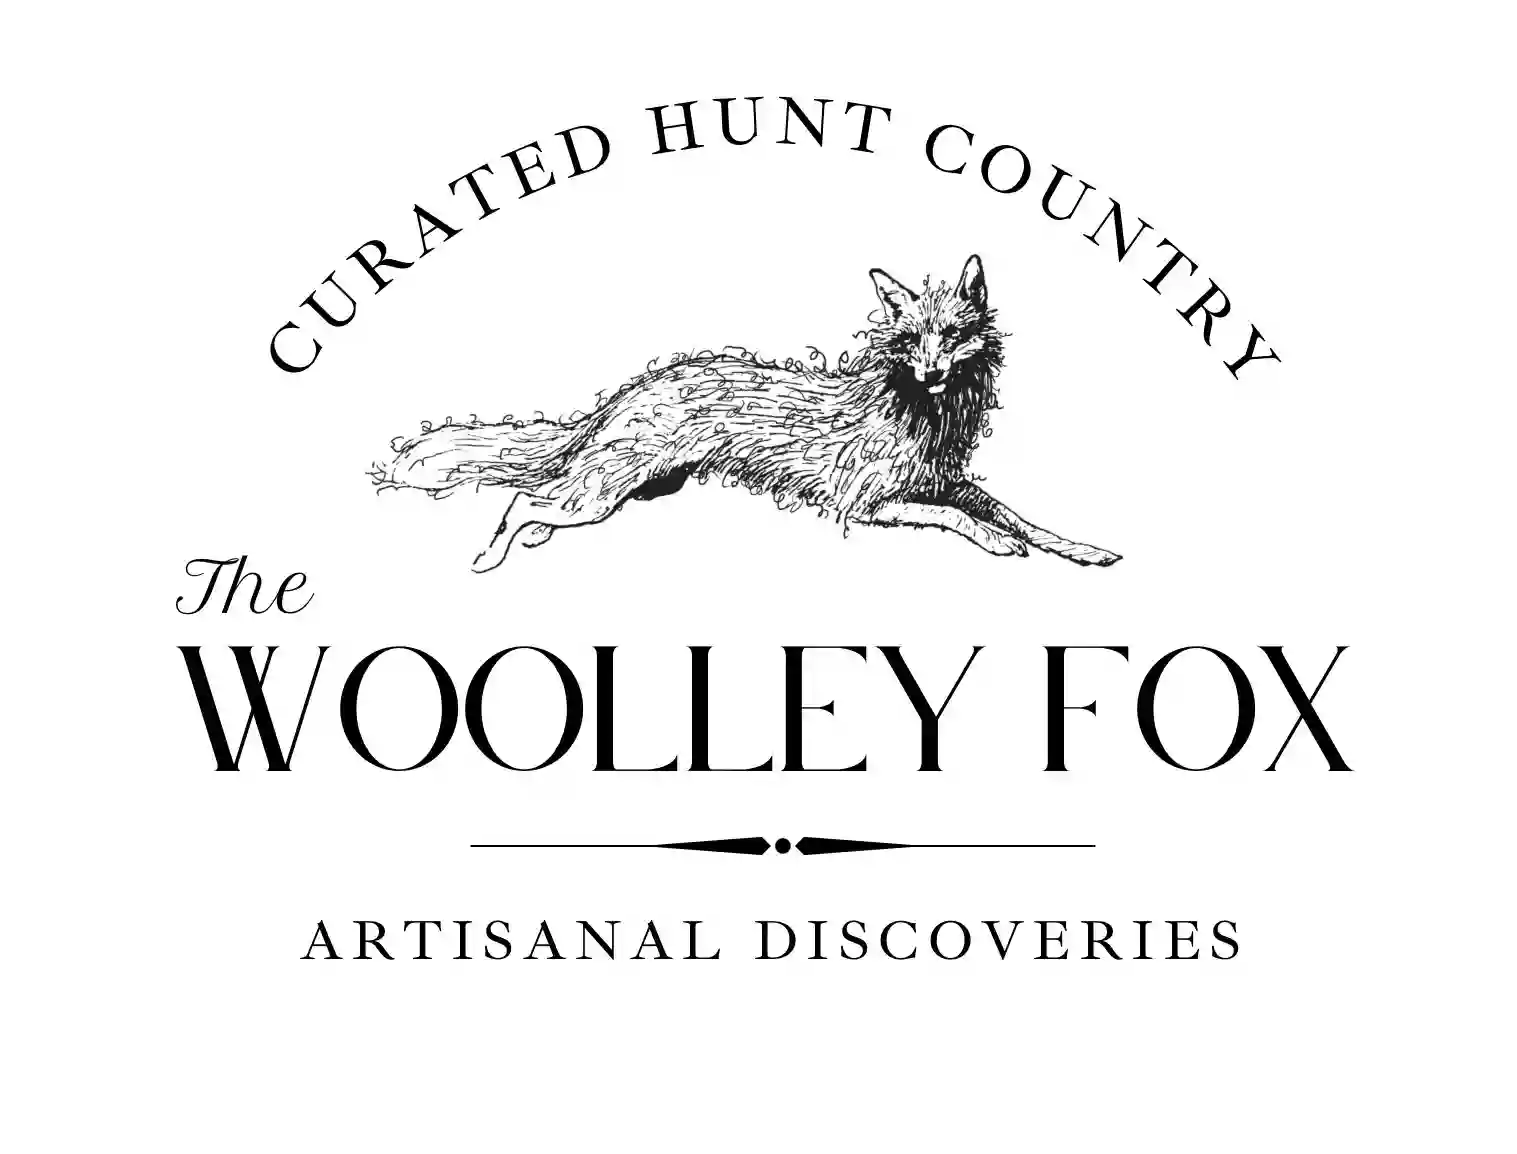 The Woolley Fox